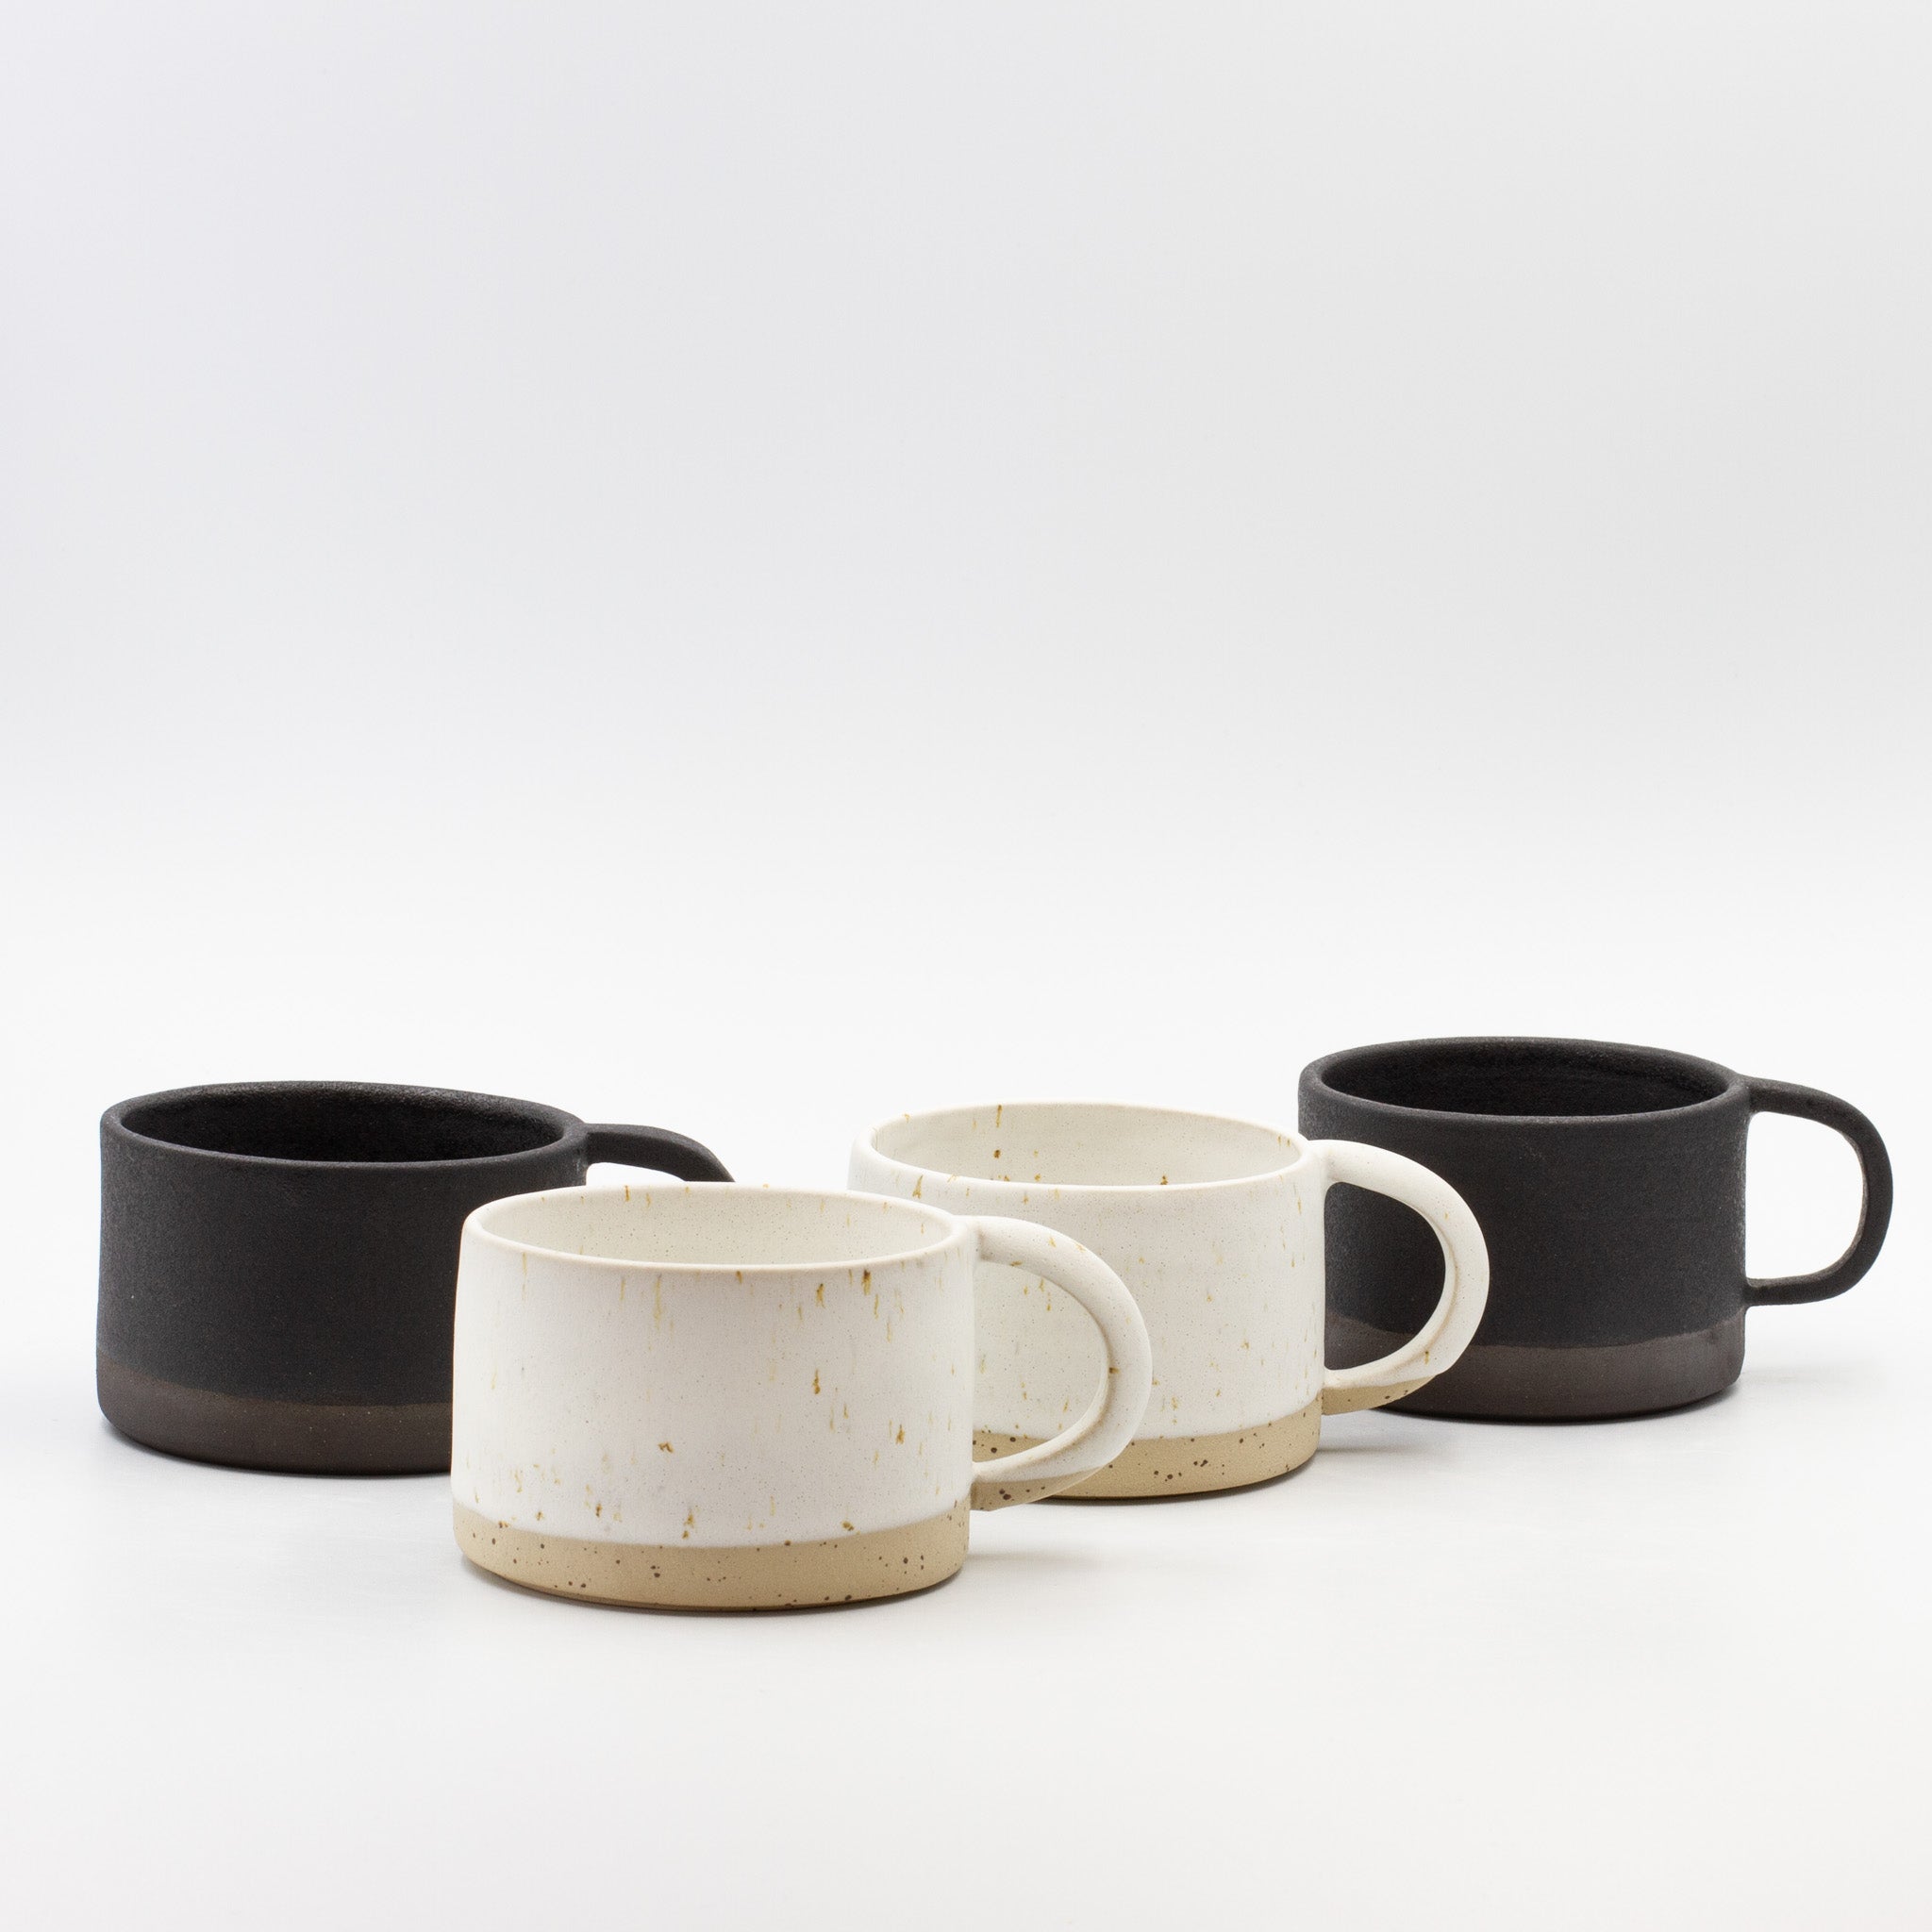 Handmade ceramic Tea cups